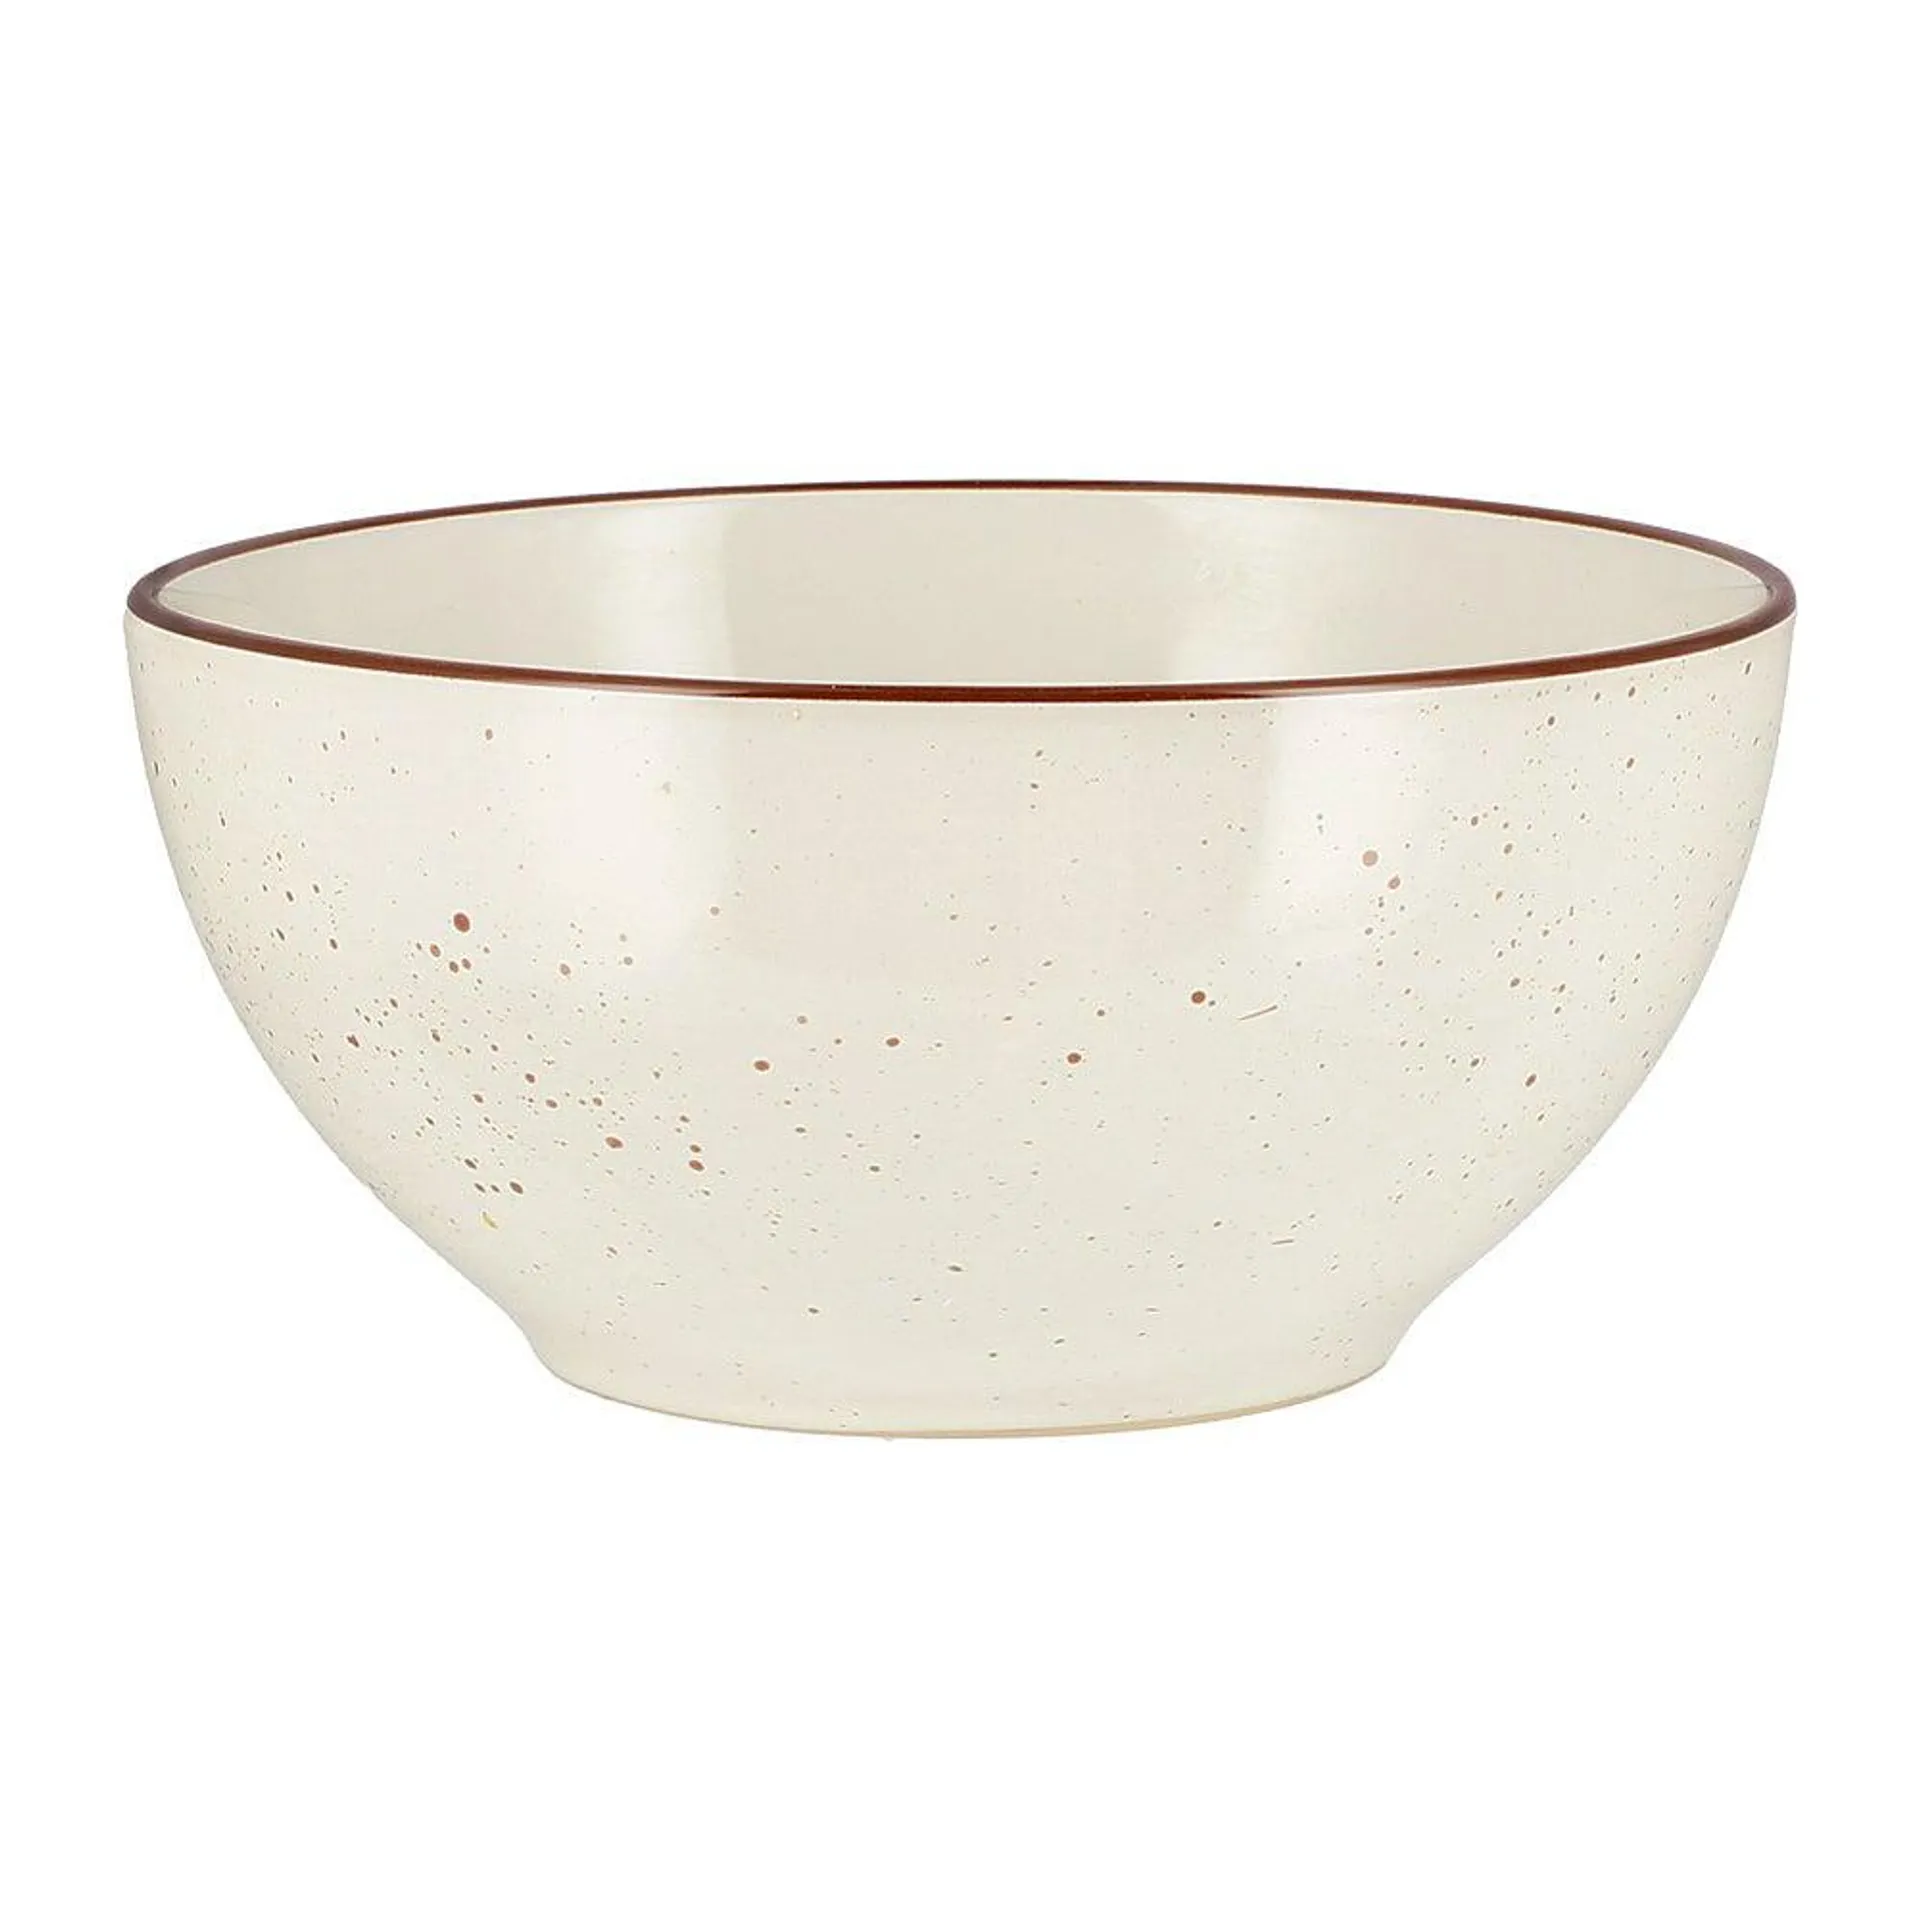 Bowl cereal cerámica rústico 810 ml